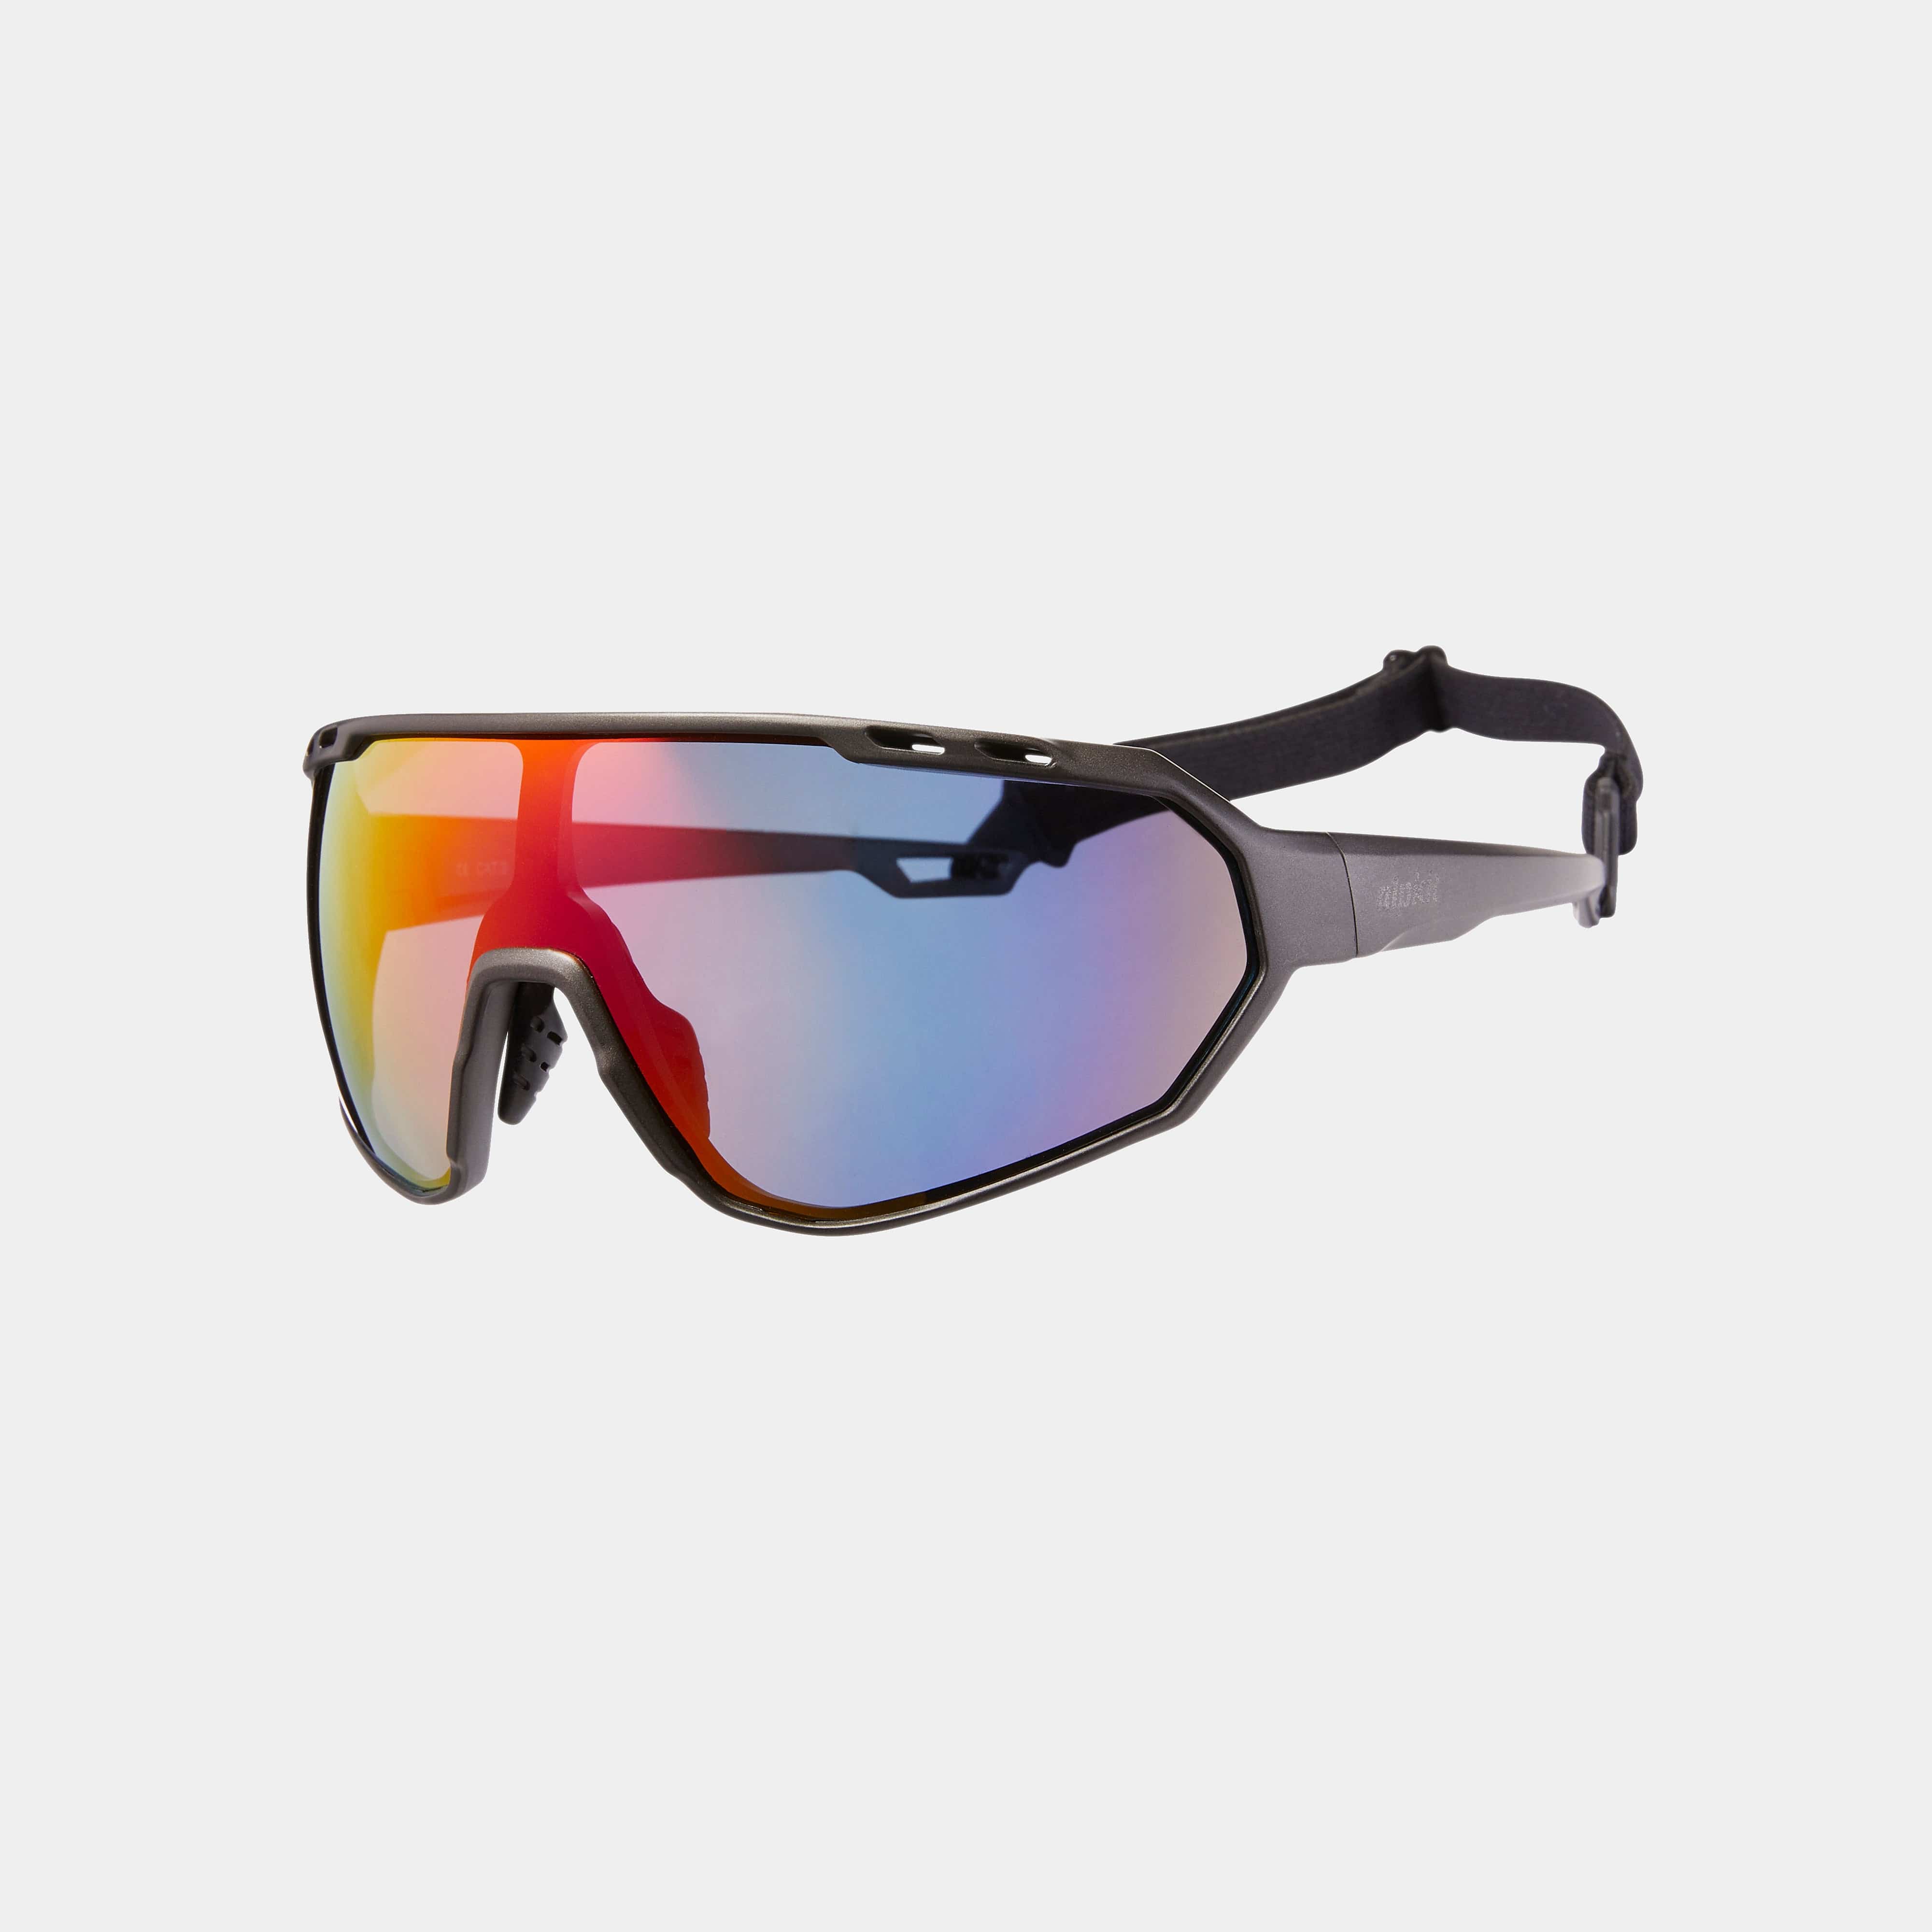 Apollo Vented Cycling Sunglasses